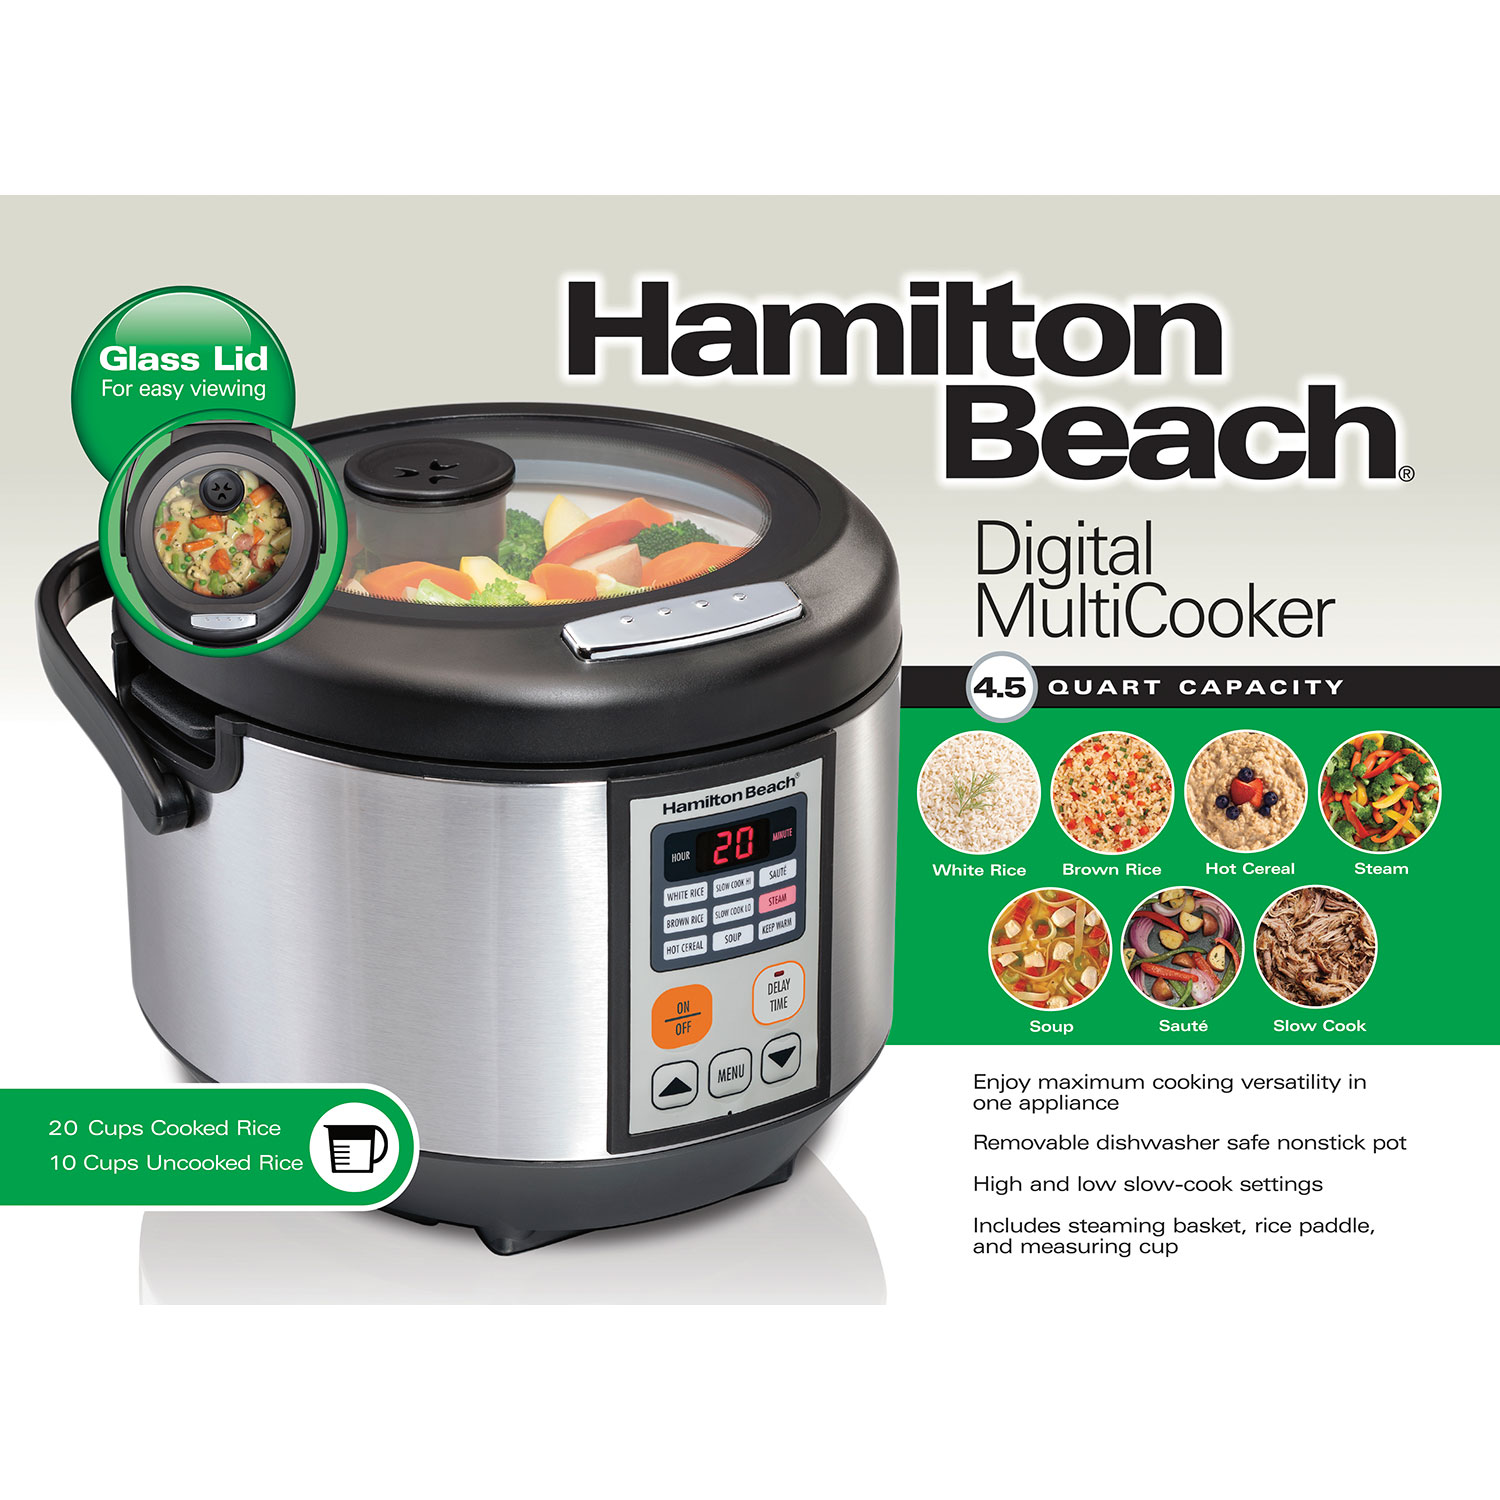 Hamilton Beach 4.5-Quart Digital Multicooker